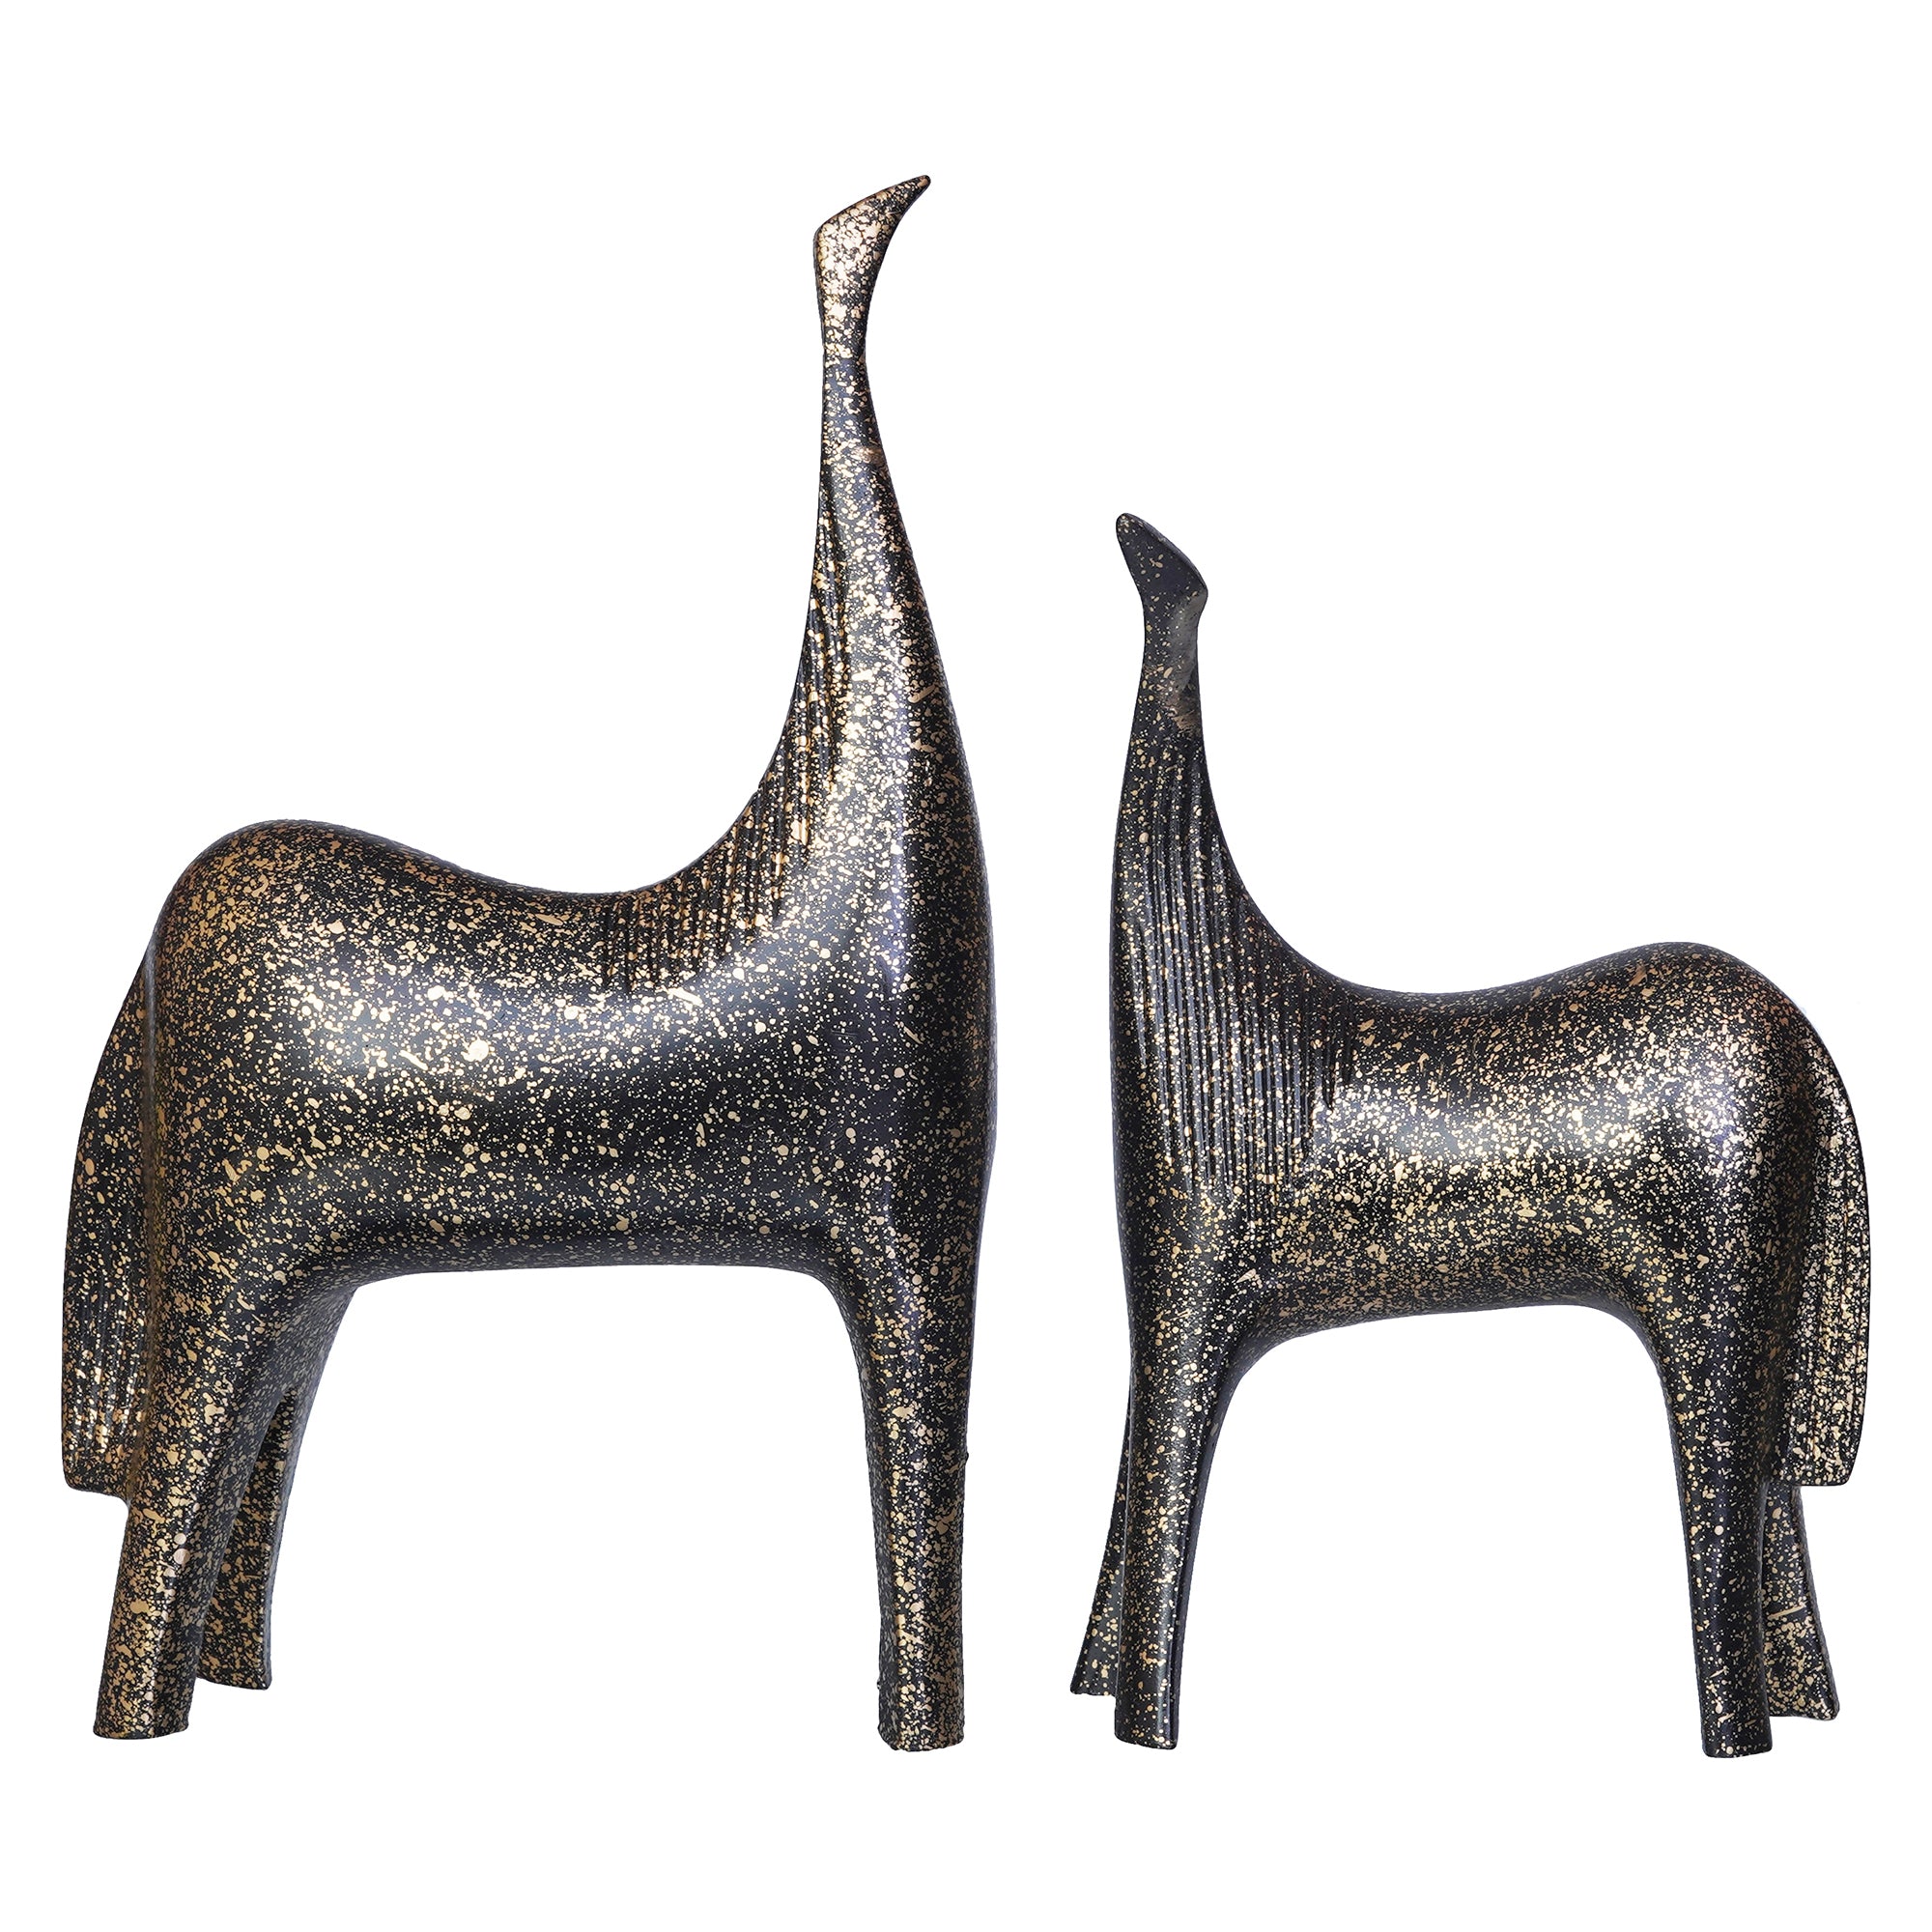 Set of 2 Black & Golden Horse Statues Decorative Animal Figurines 6